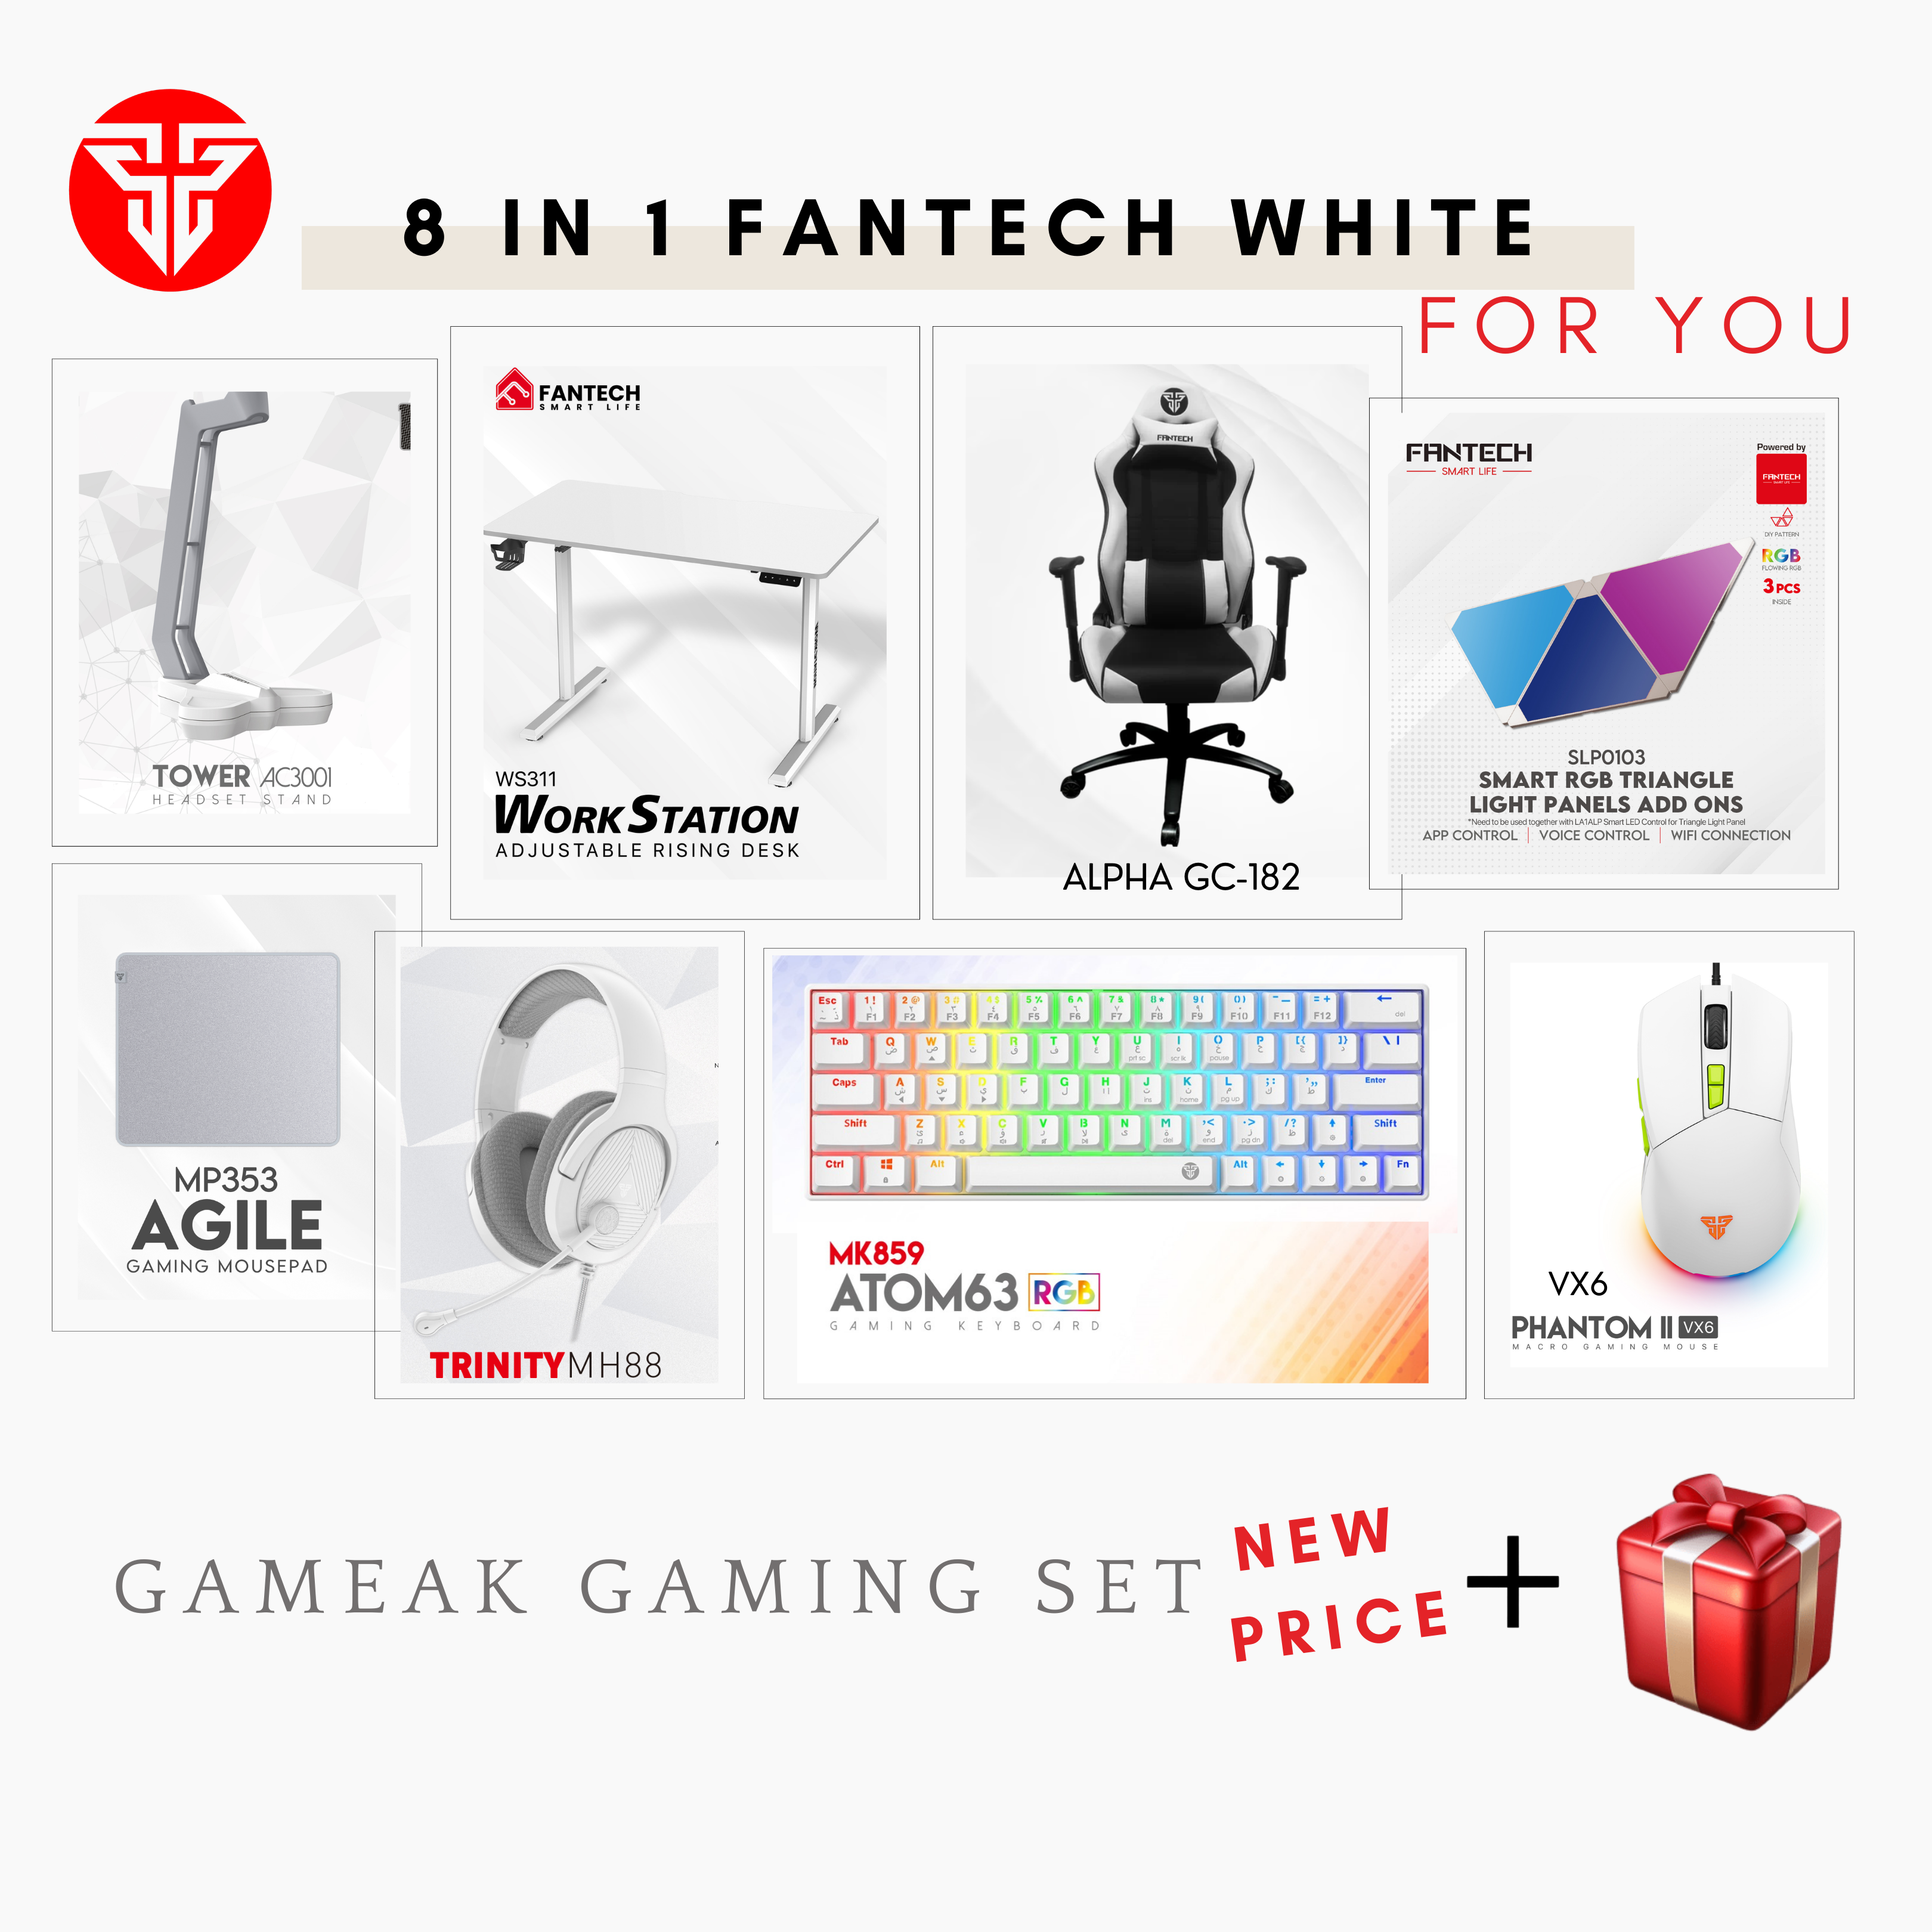 Fantech white 8 in 1 Gameak Gaming set Bundle 360 JOD